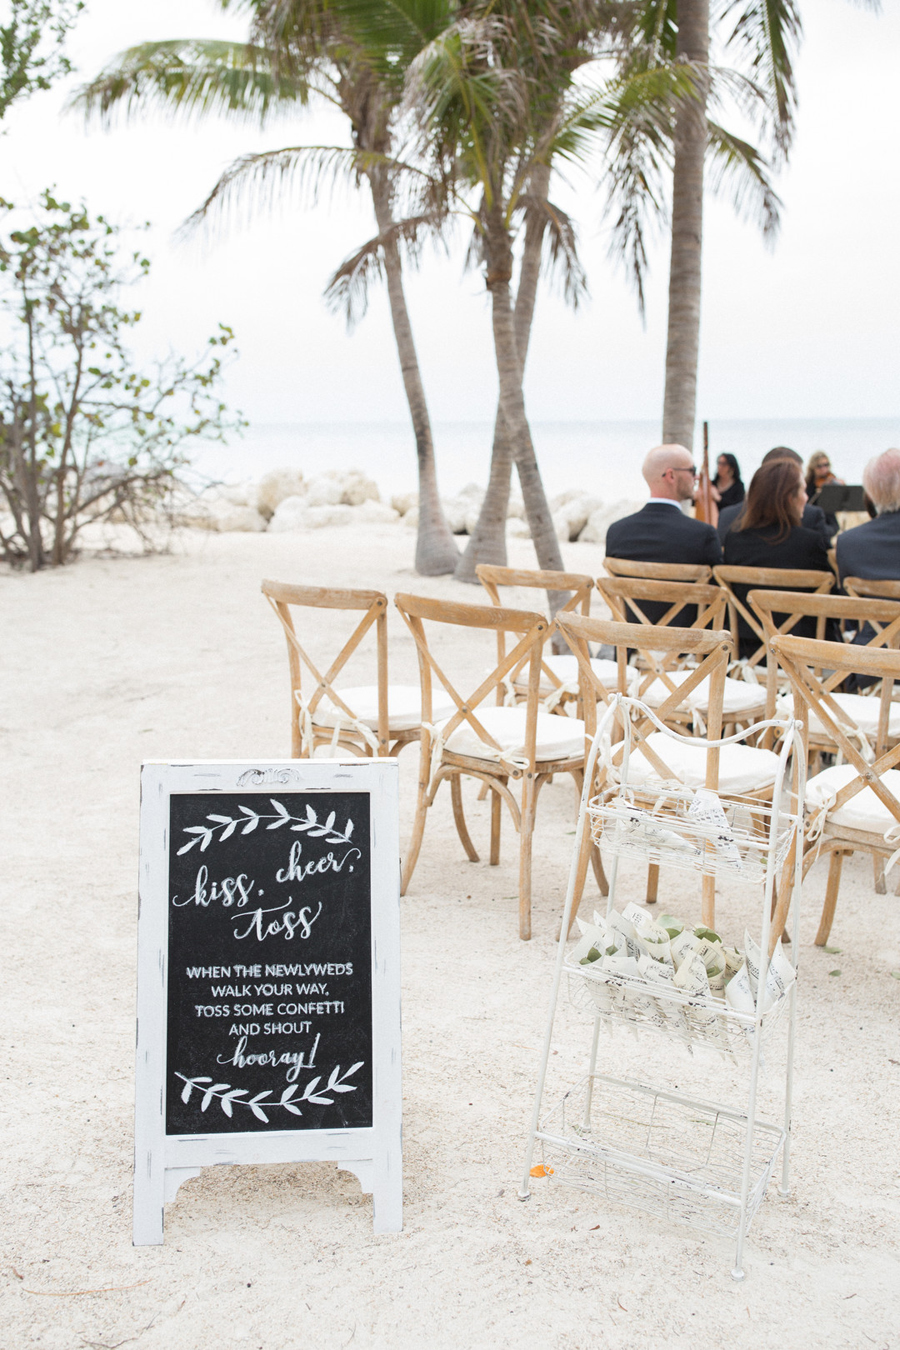 Stunningly Elegant Key West Real Wedding